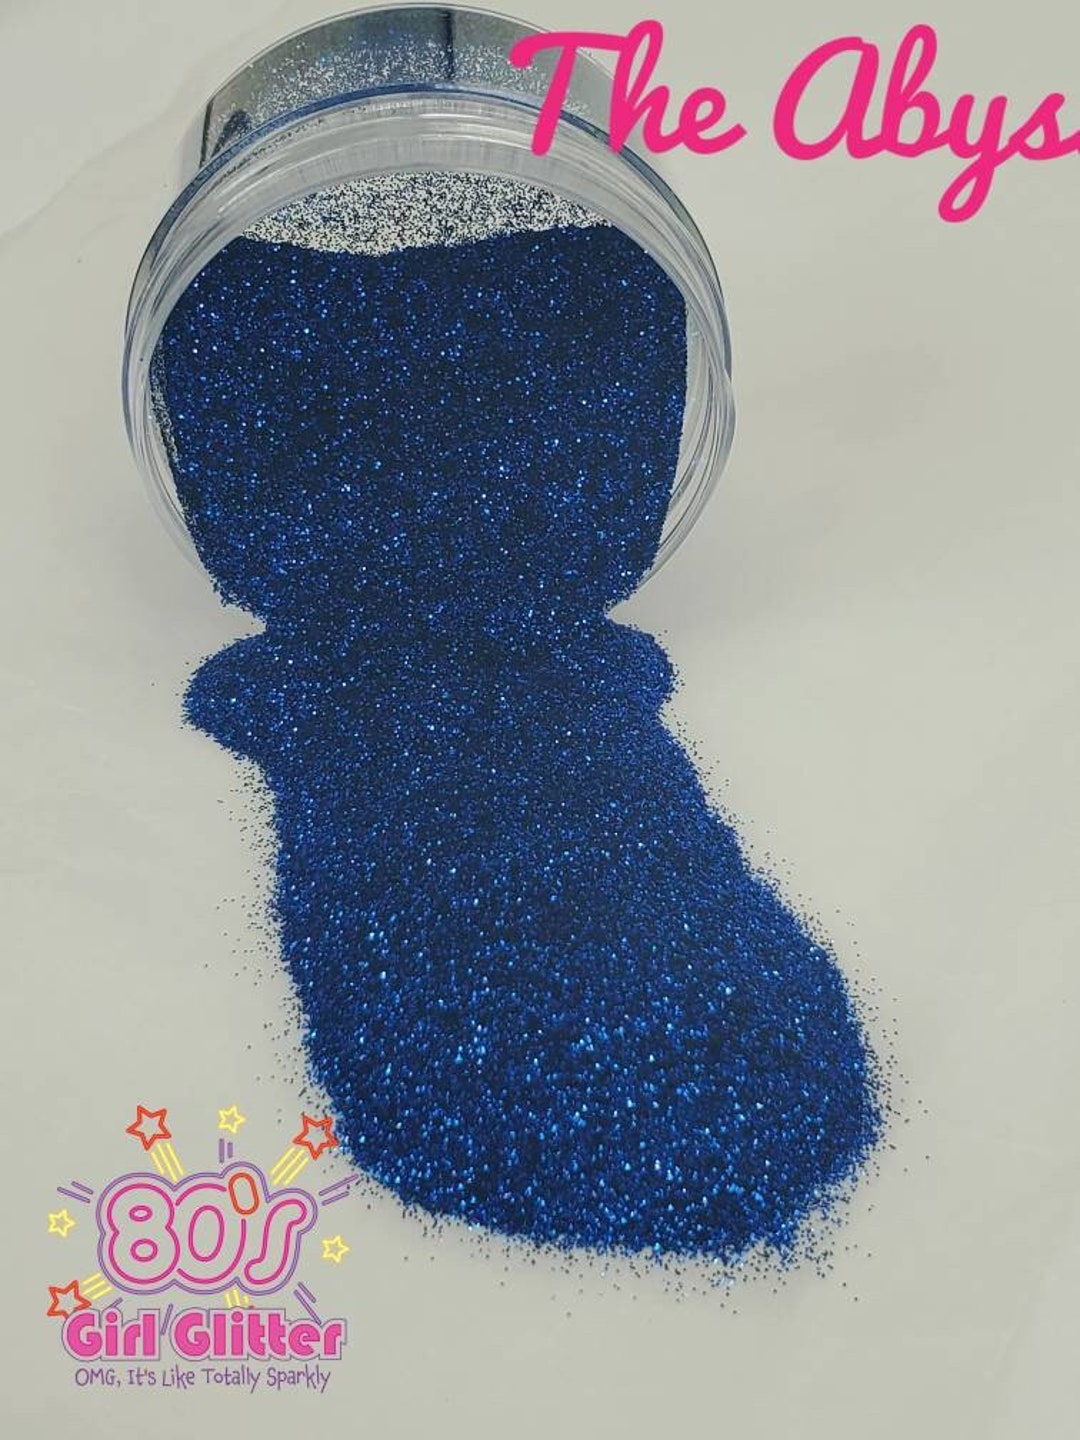 Rumble Fish - Glitter - Blue Glitter - Blue Glitter Foil/Flakes